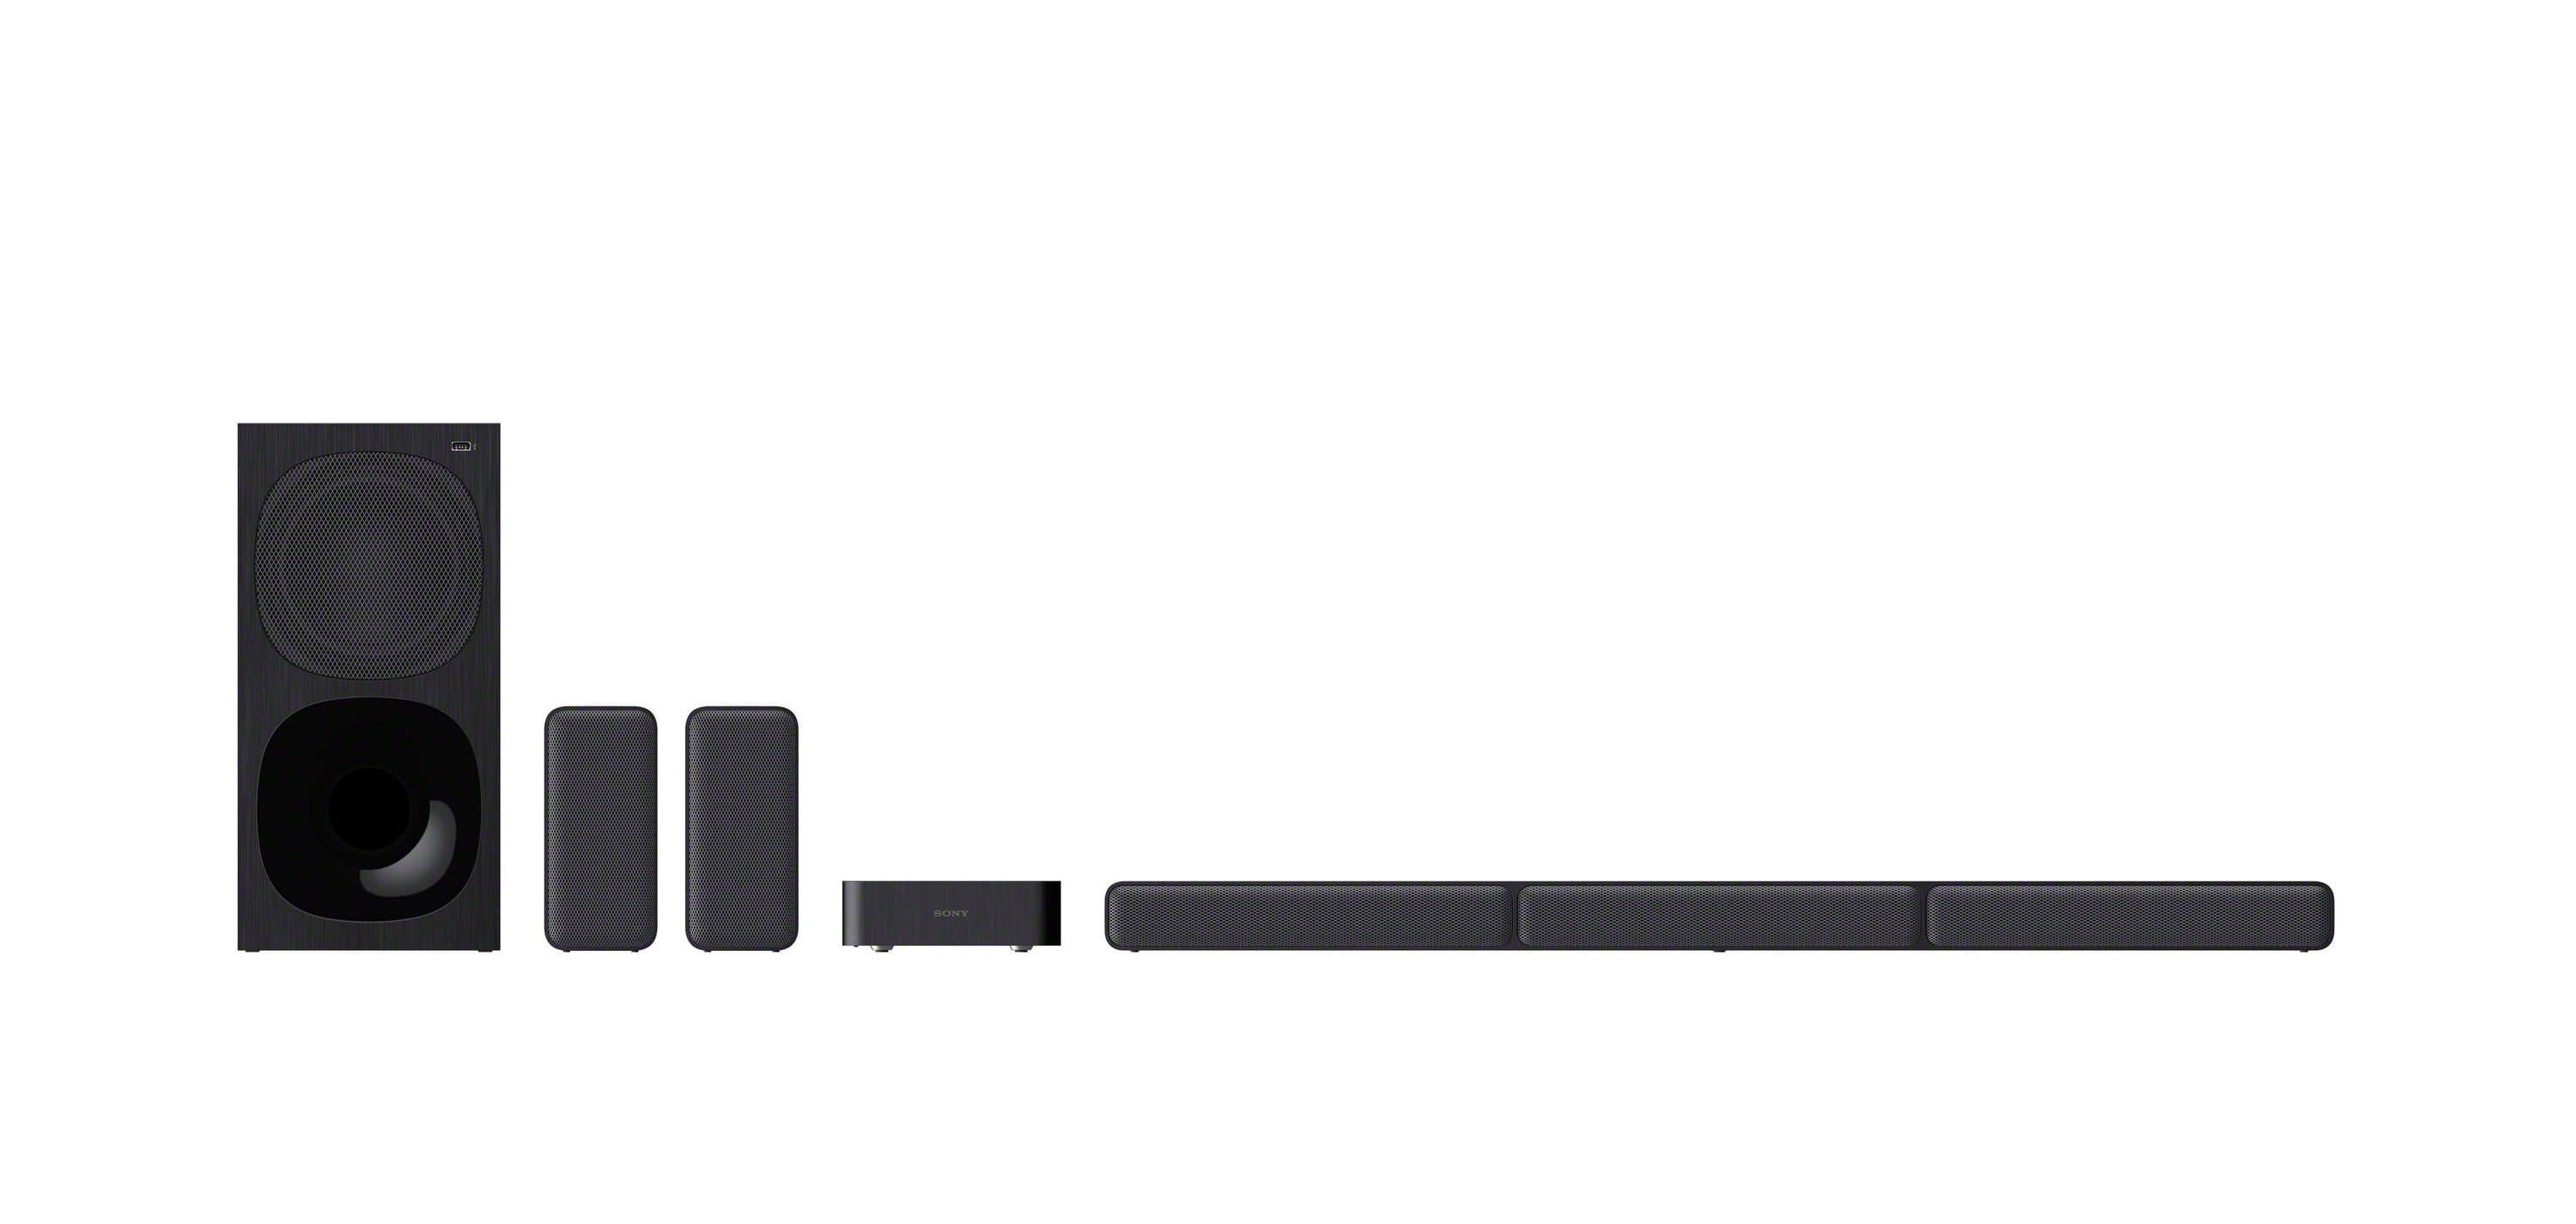 Buy Sony HT-S40R 5.1ch Home Cinema Soundbar System Online at Lowest